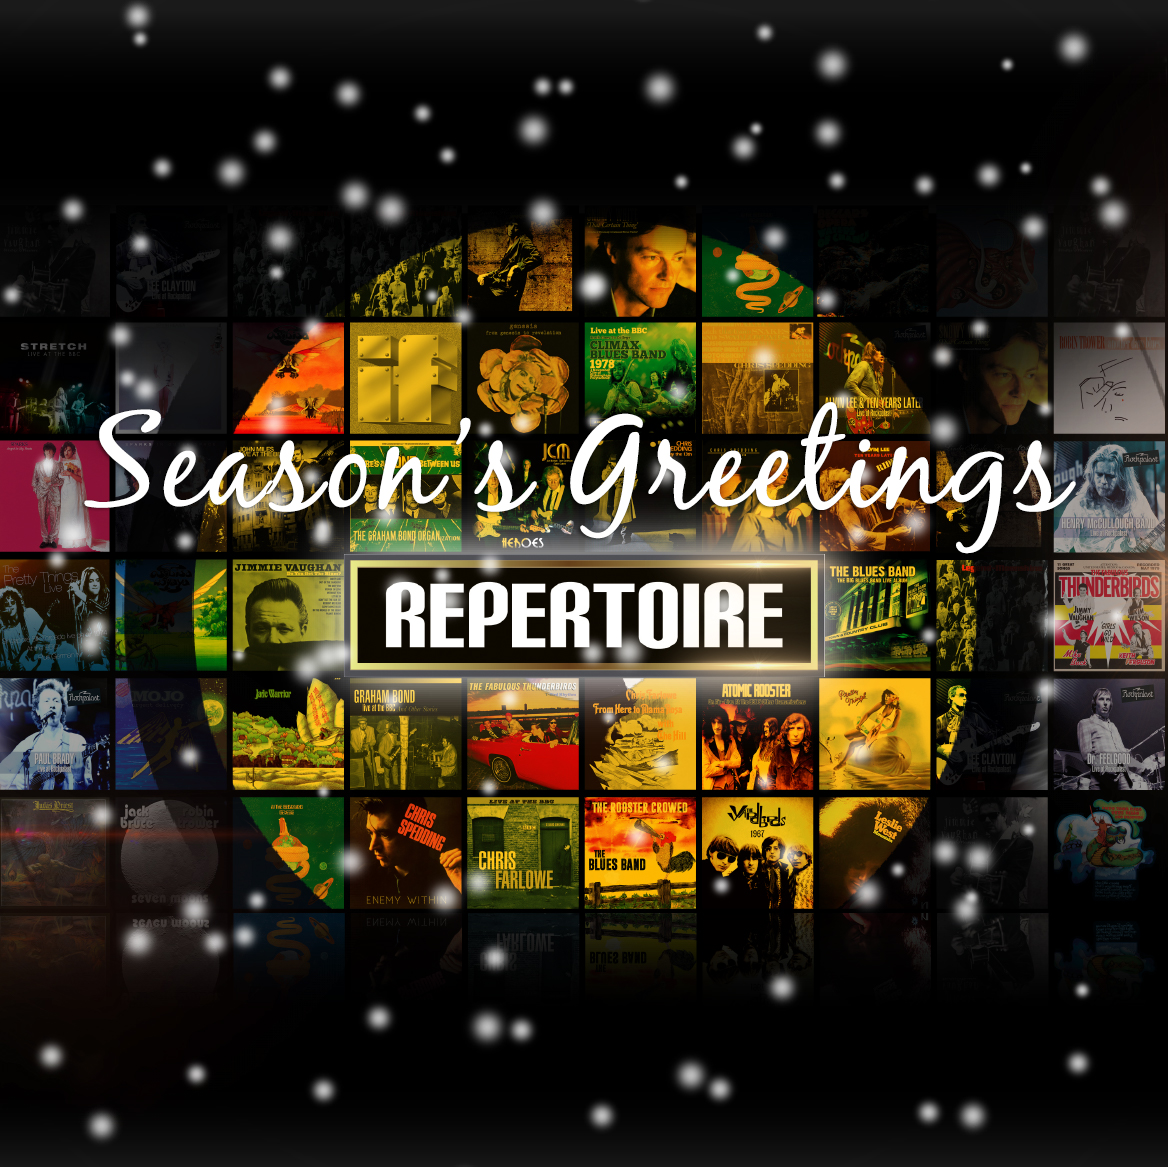 Season's Greetings from Repertoire Records Repertoire Records